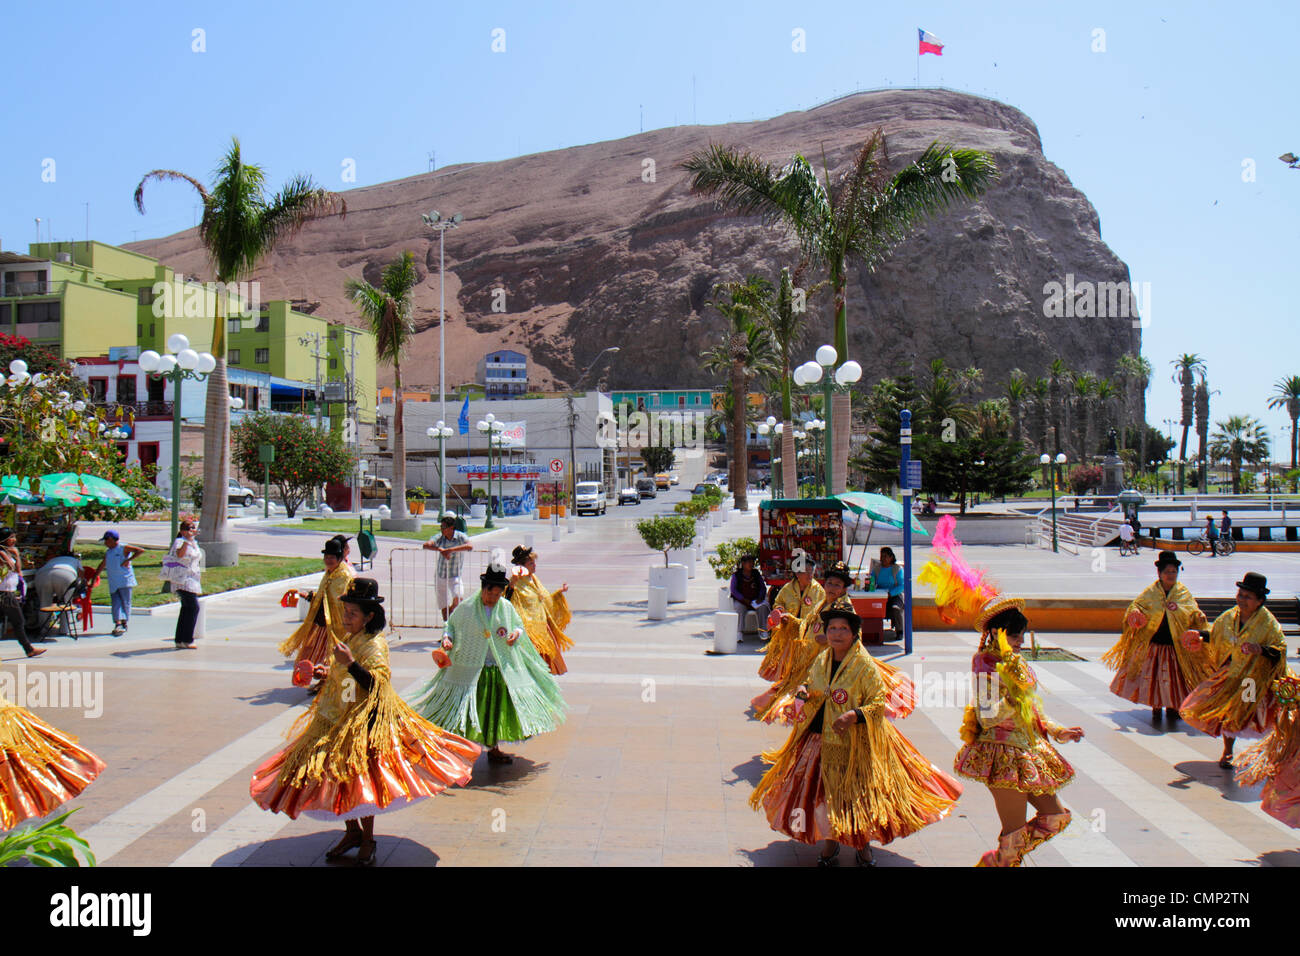 Arica Chile,Plaza Colon,El Morro de Arica,rock,Carnaval Andino,carnaval andin,parade,indigène,patrimoine Aymara,folklore danse traditionnelle,troupe,HIS Banque D'Images